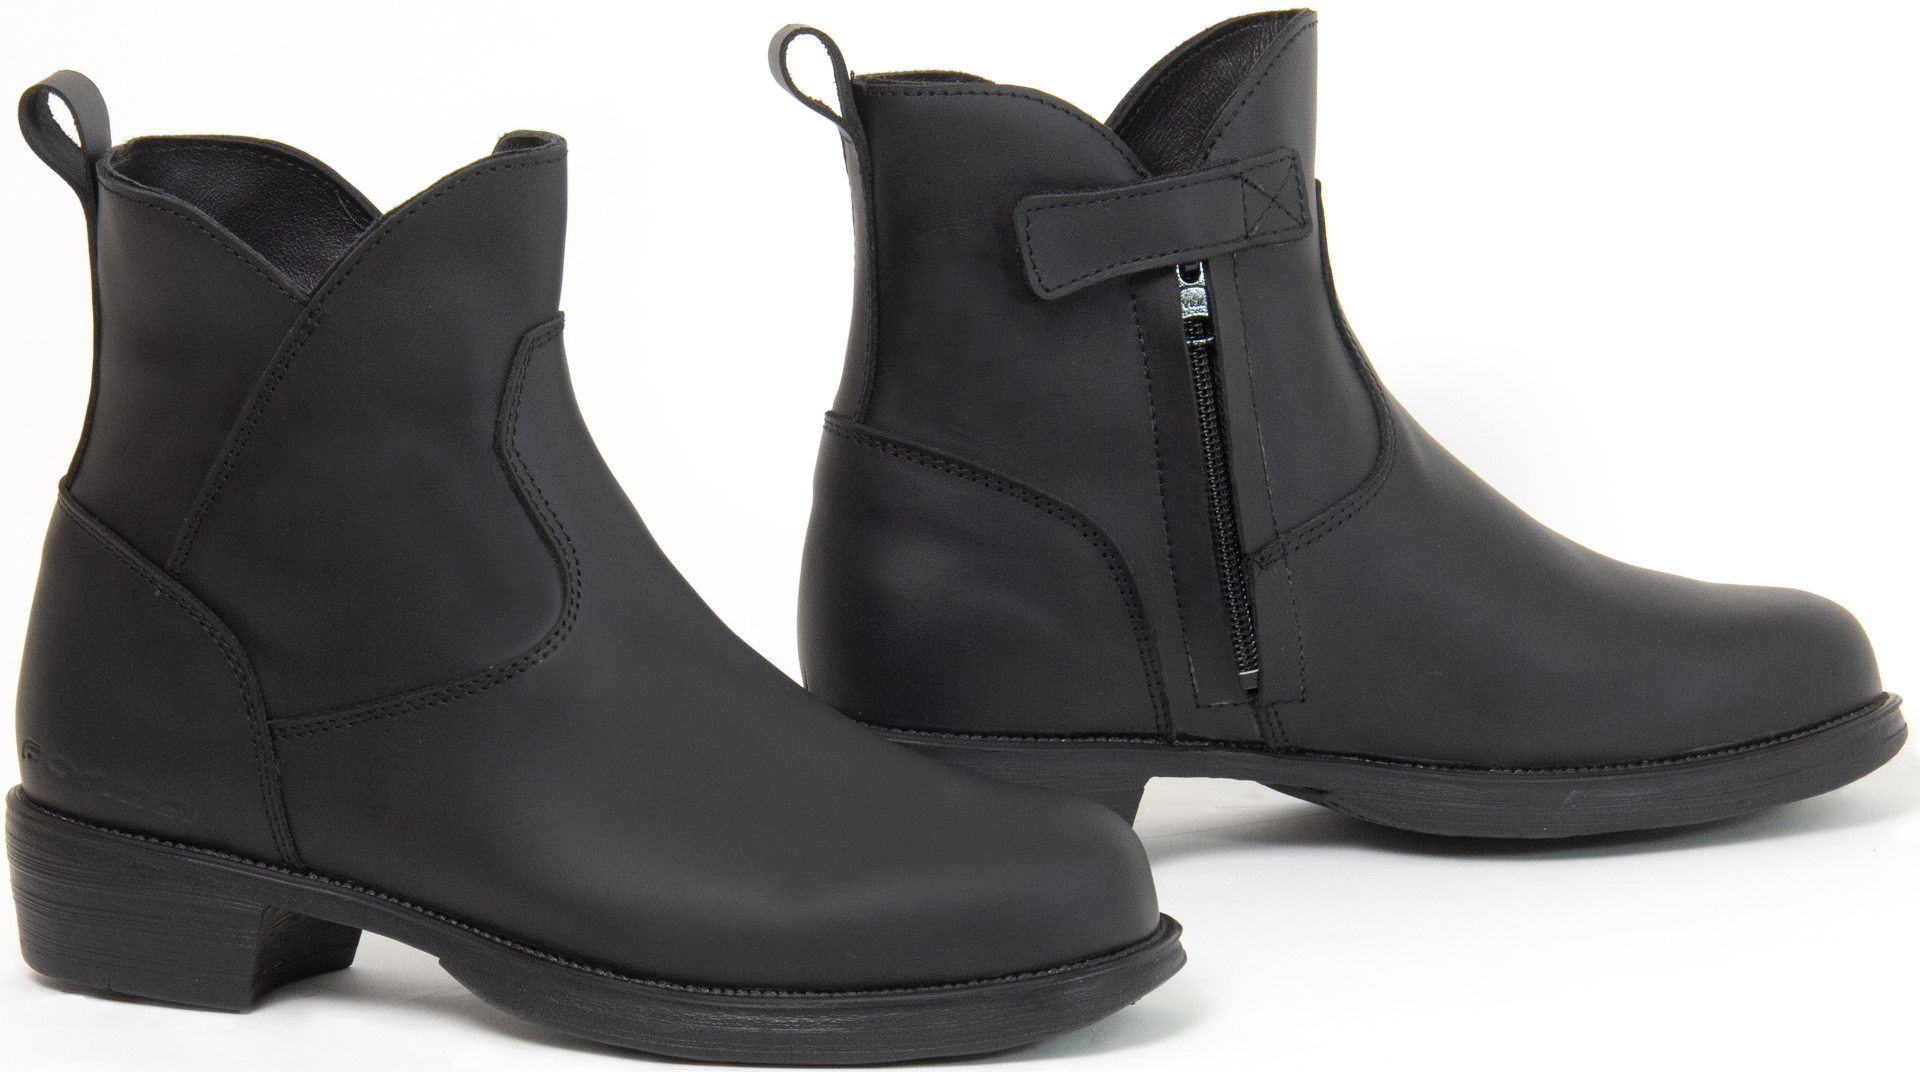 Forma Joy Dry Ladies Motorcycle Boots, black, Size 38 for Women, black, Size 38 for Women